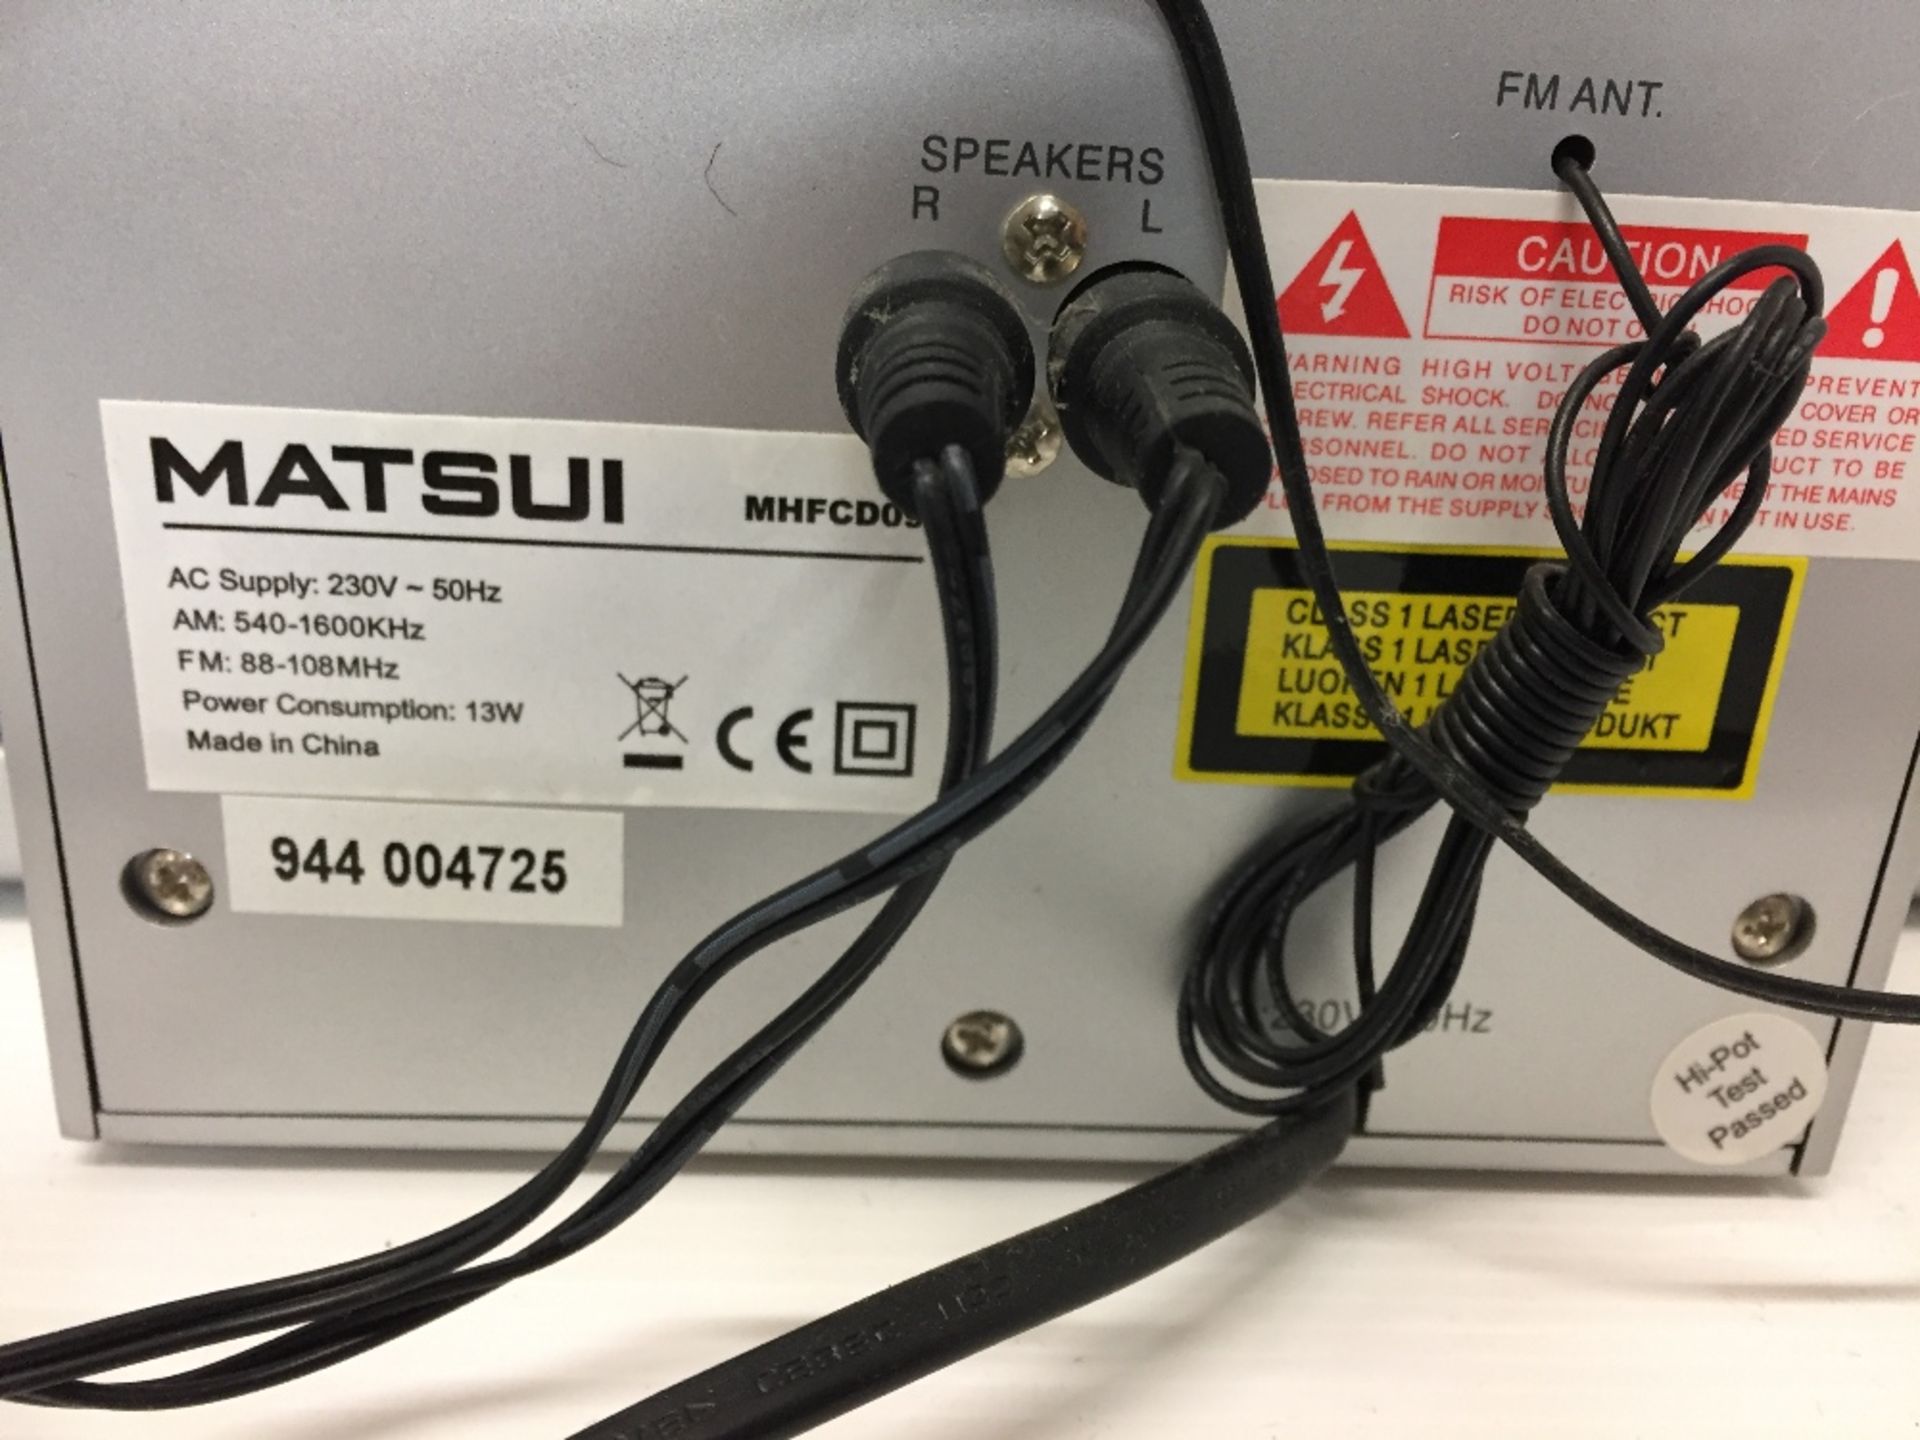 Matsui CD-Radio Stereo Micro System 17cm high (saleroom location: U10) - Image 3 of 3